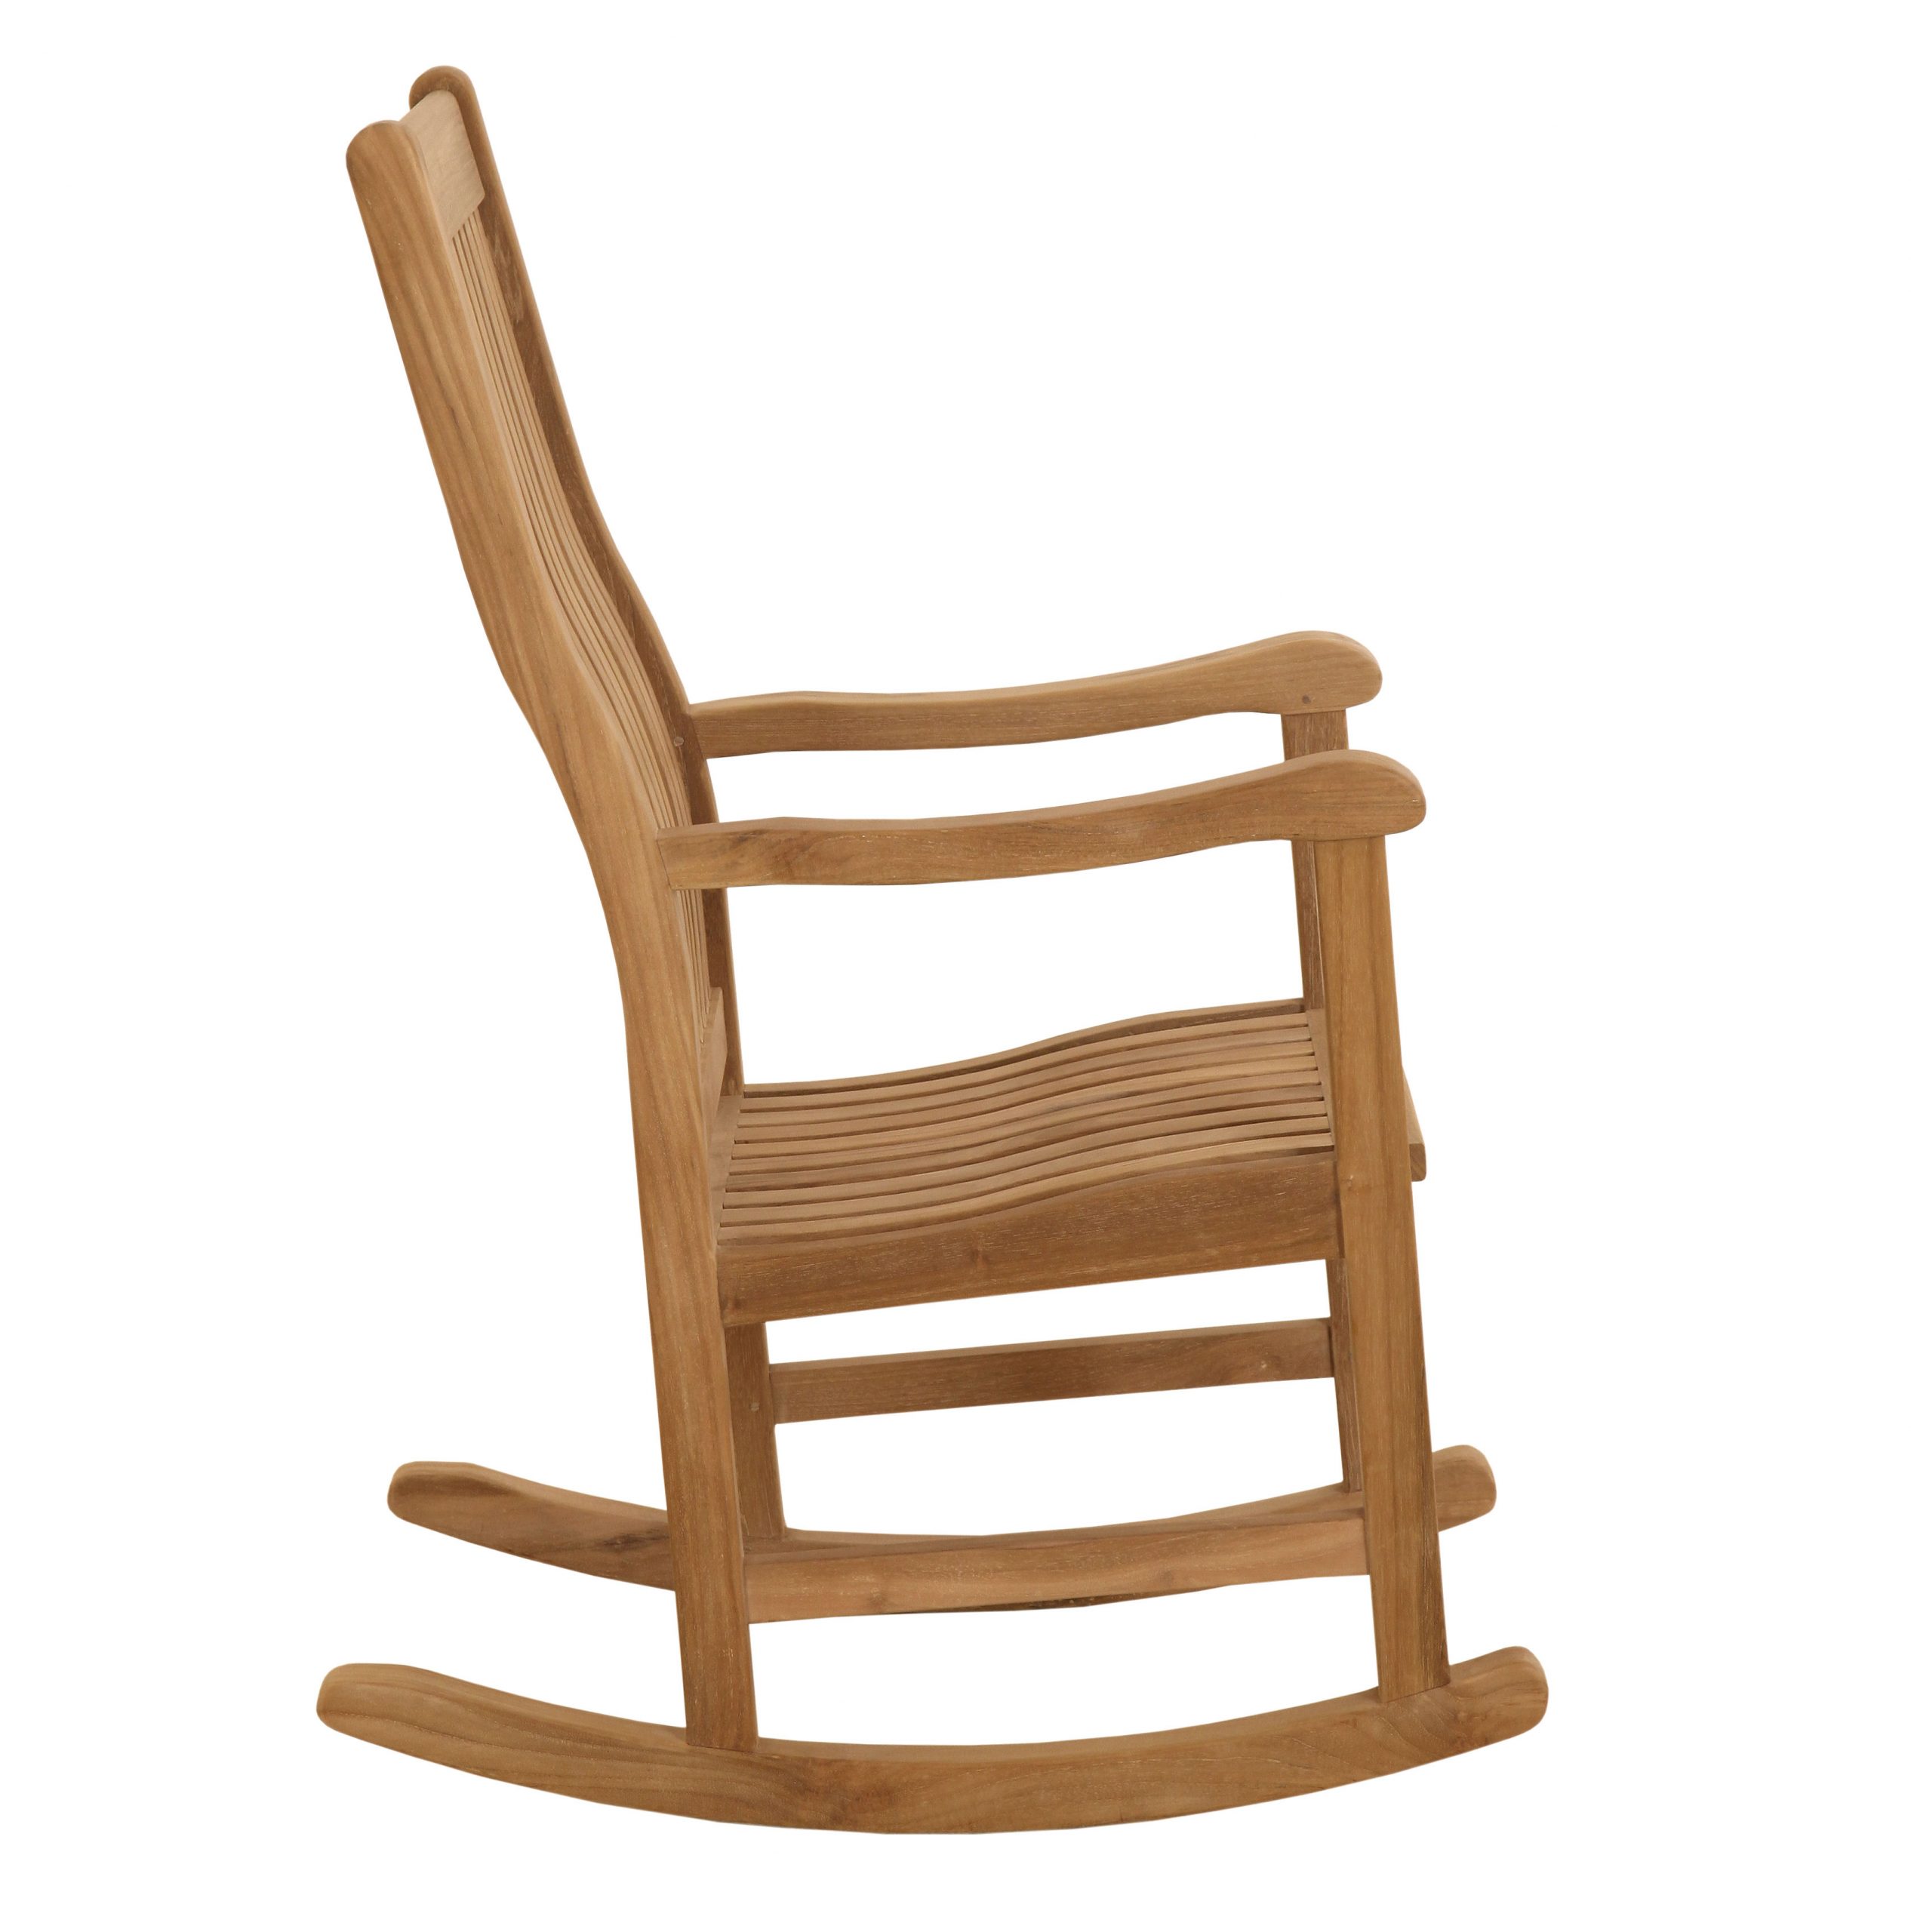 Classic Teak Rocking Chair On At, Teak Outdoor Furniture Rocking Chair